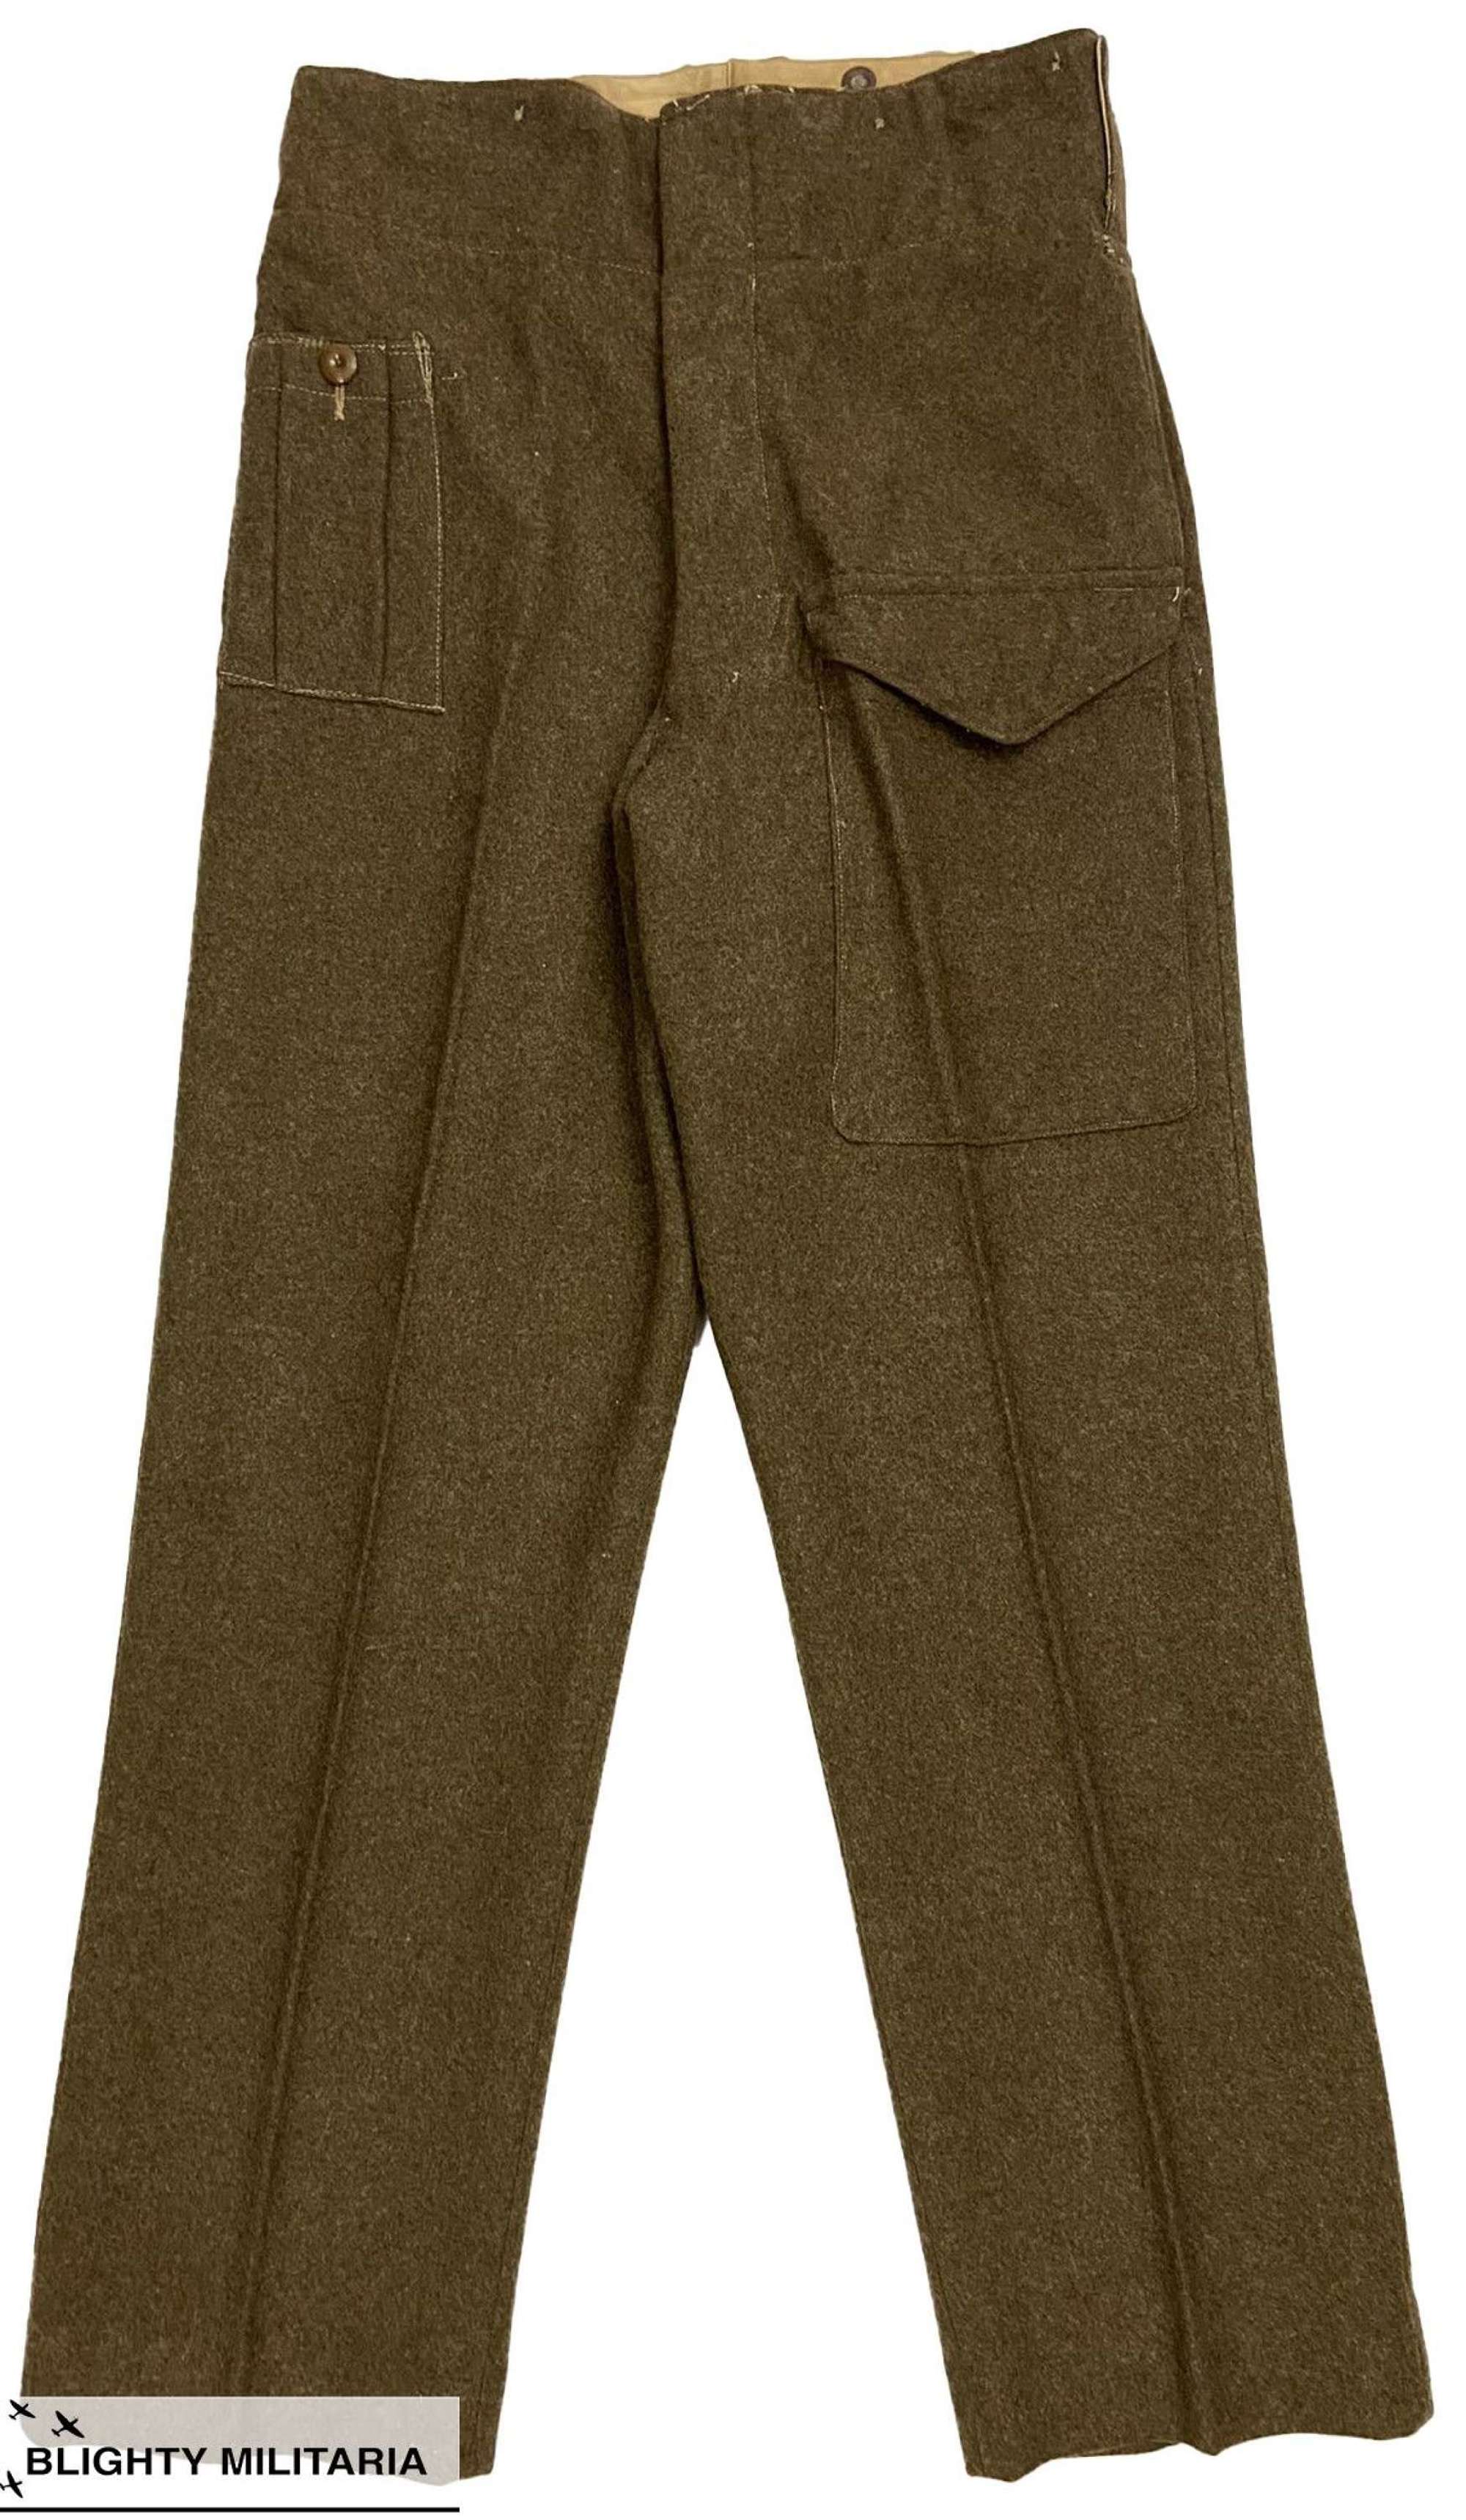 Original 1940 Pattern Battledress Trousers - Size 14 32x33